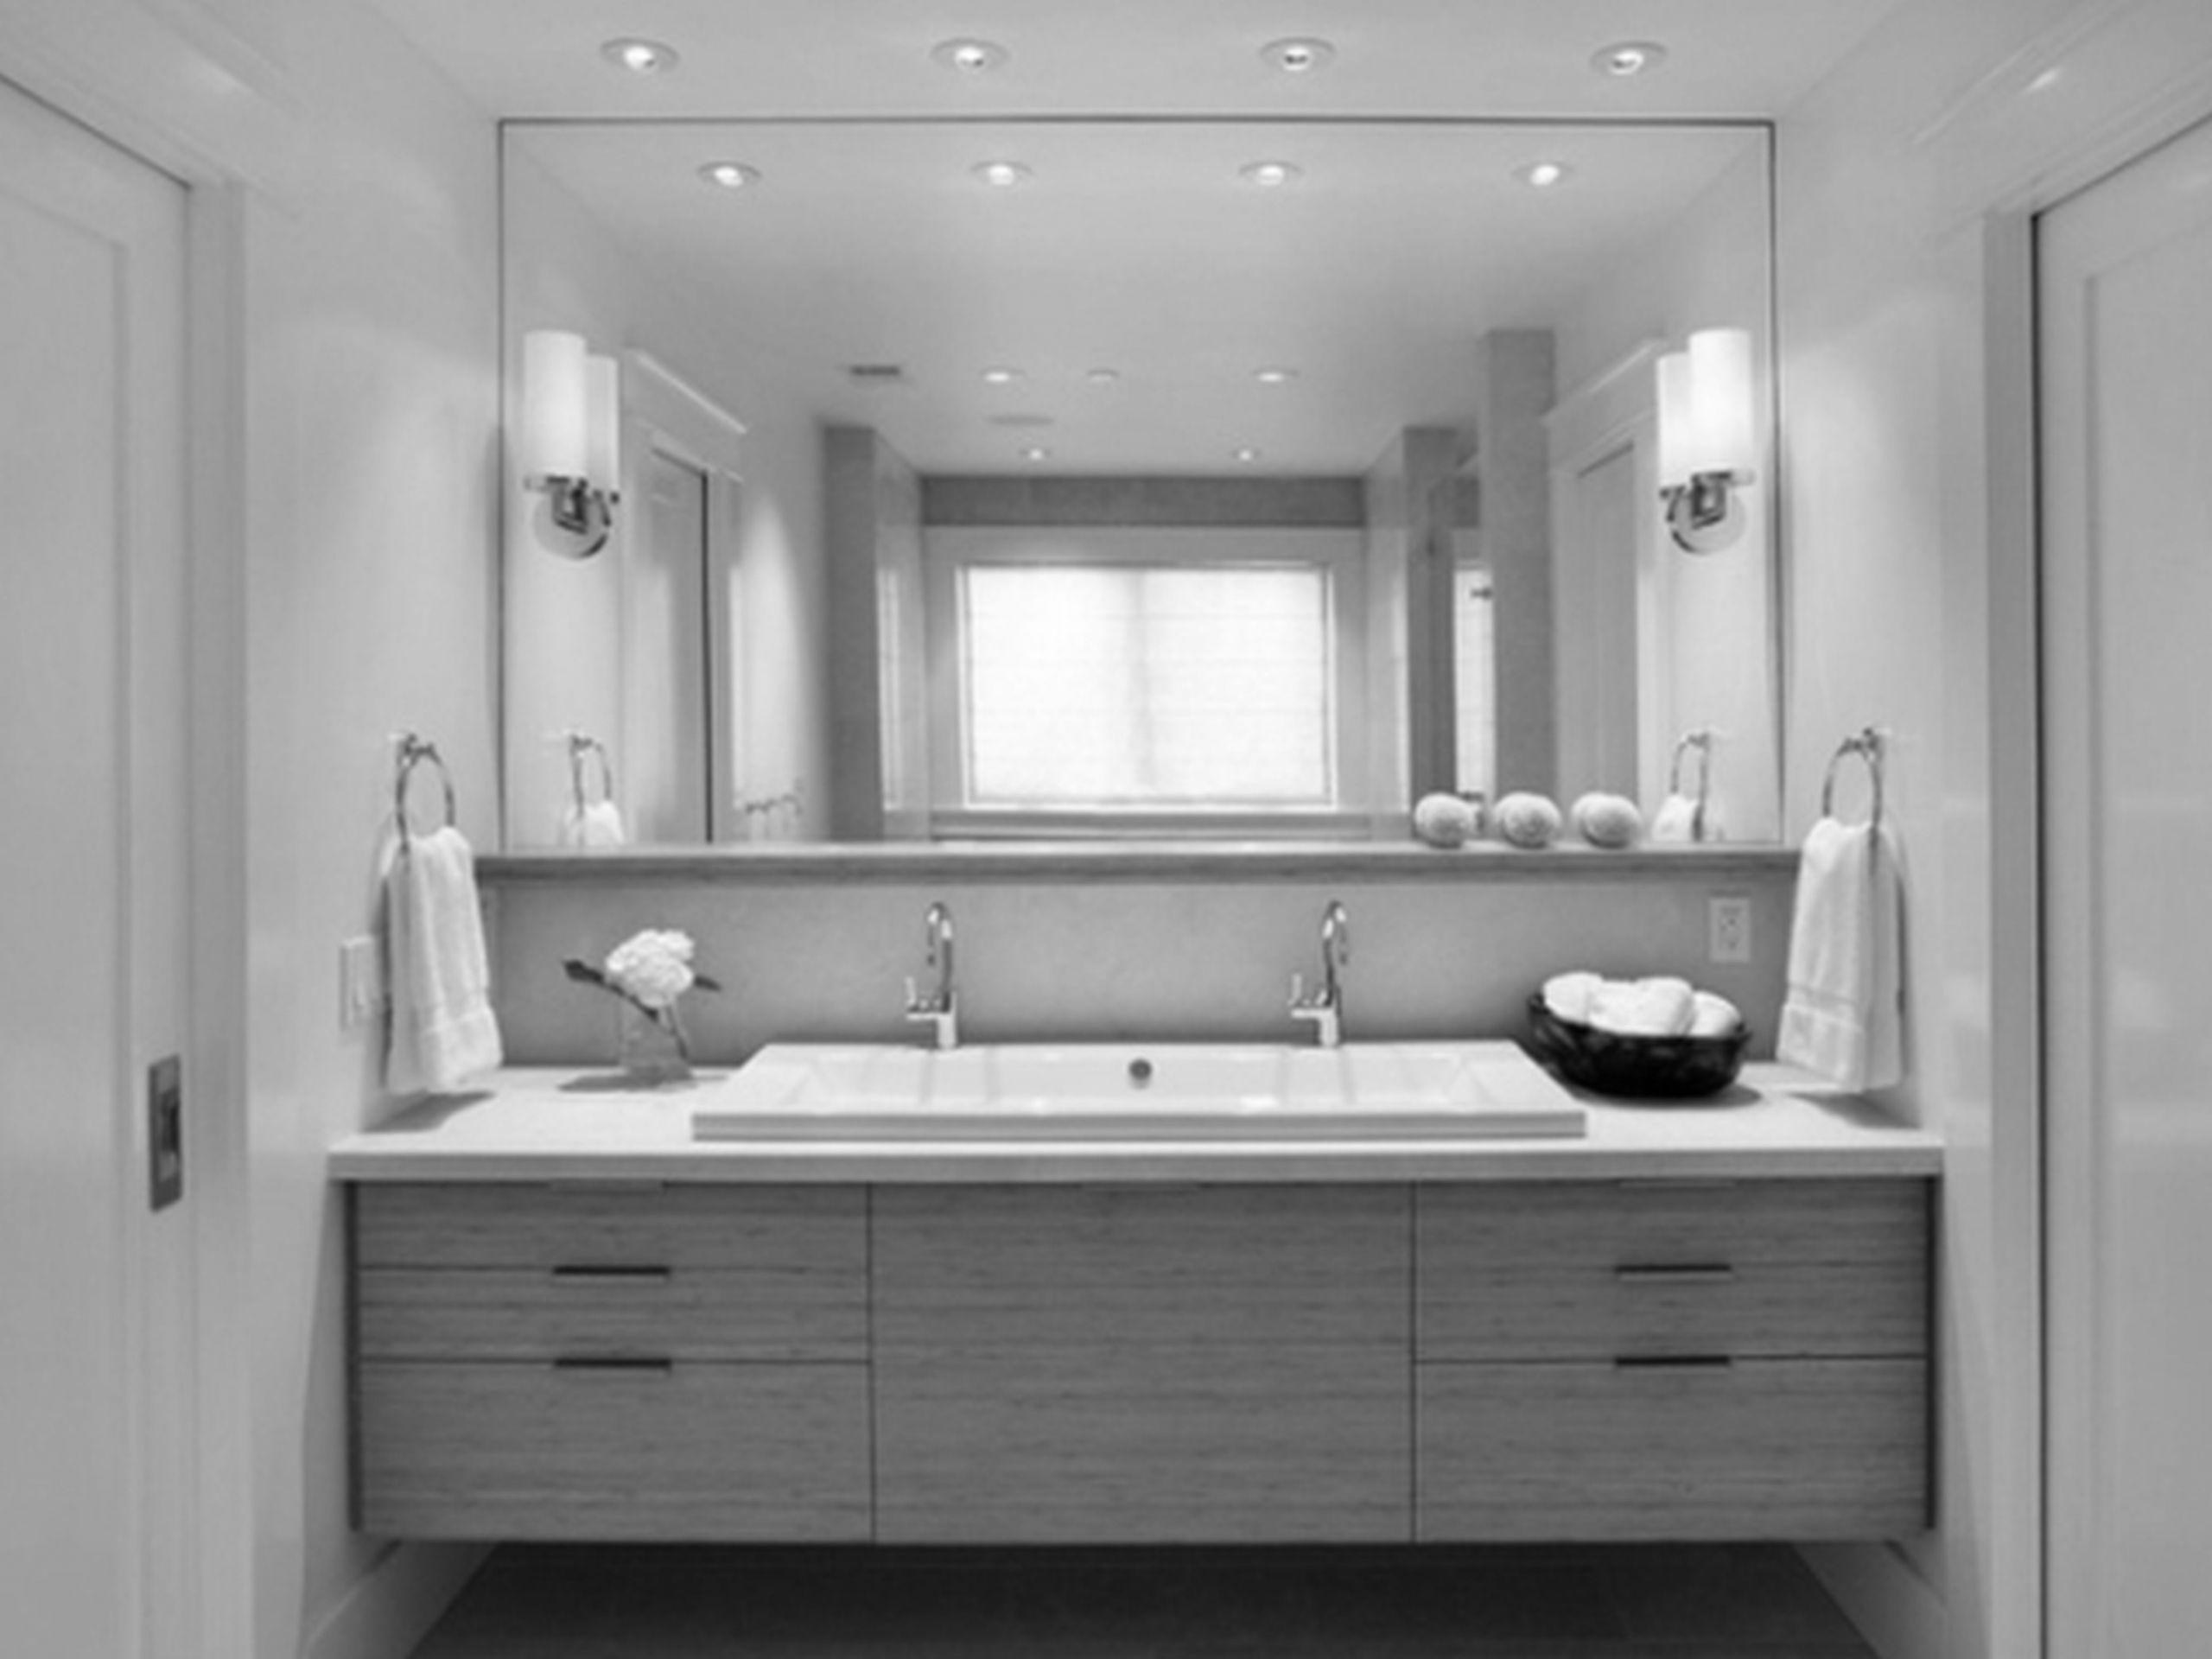 Square Bathroom Mirror
 Silver Bathroom Mirror Rectangular